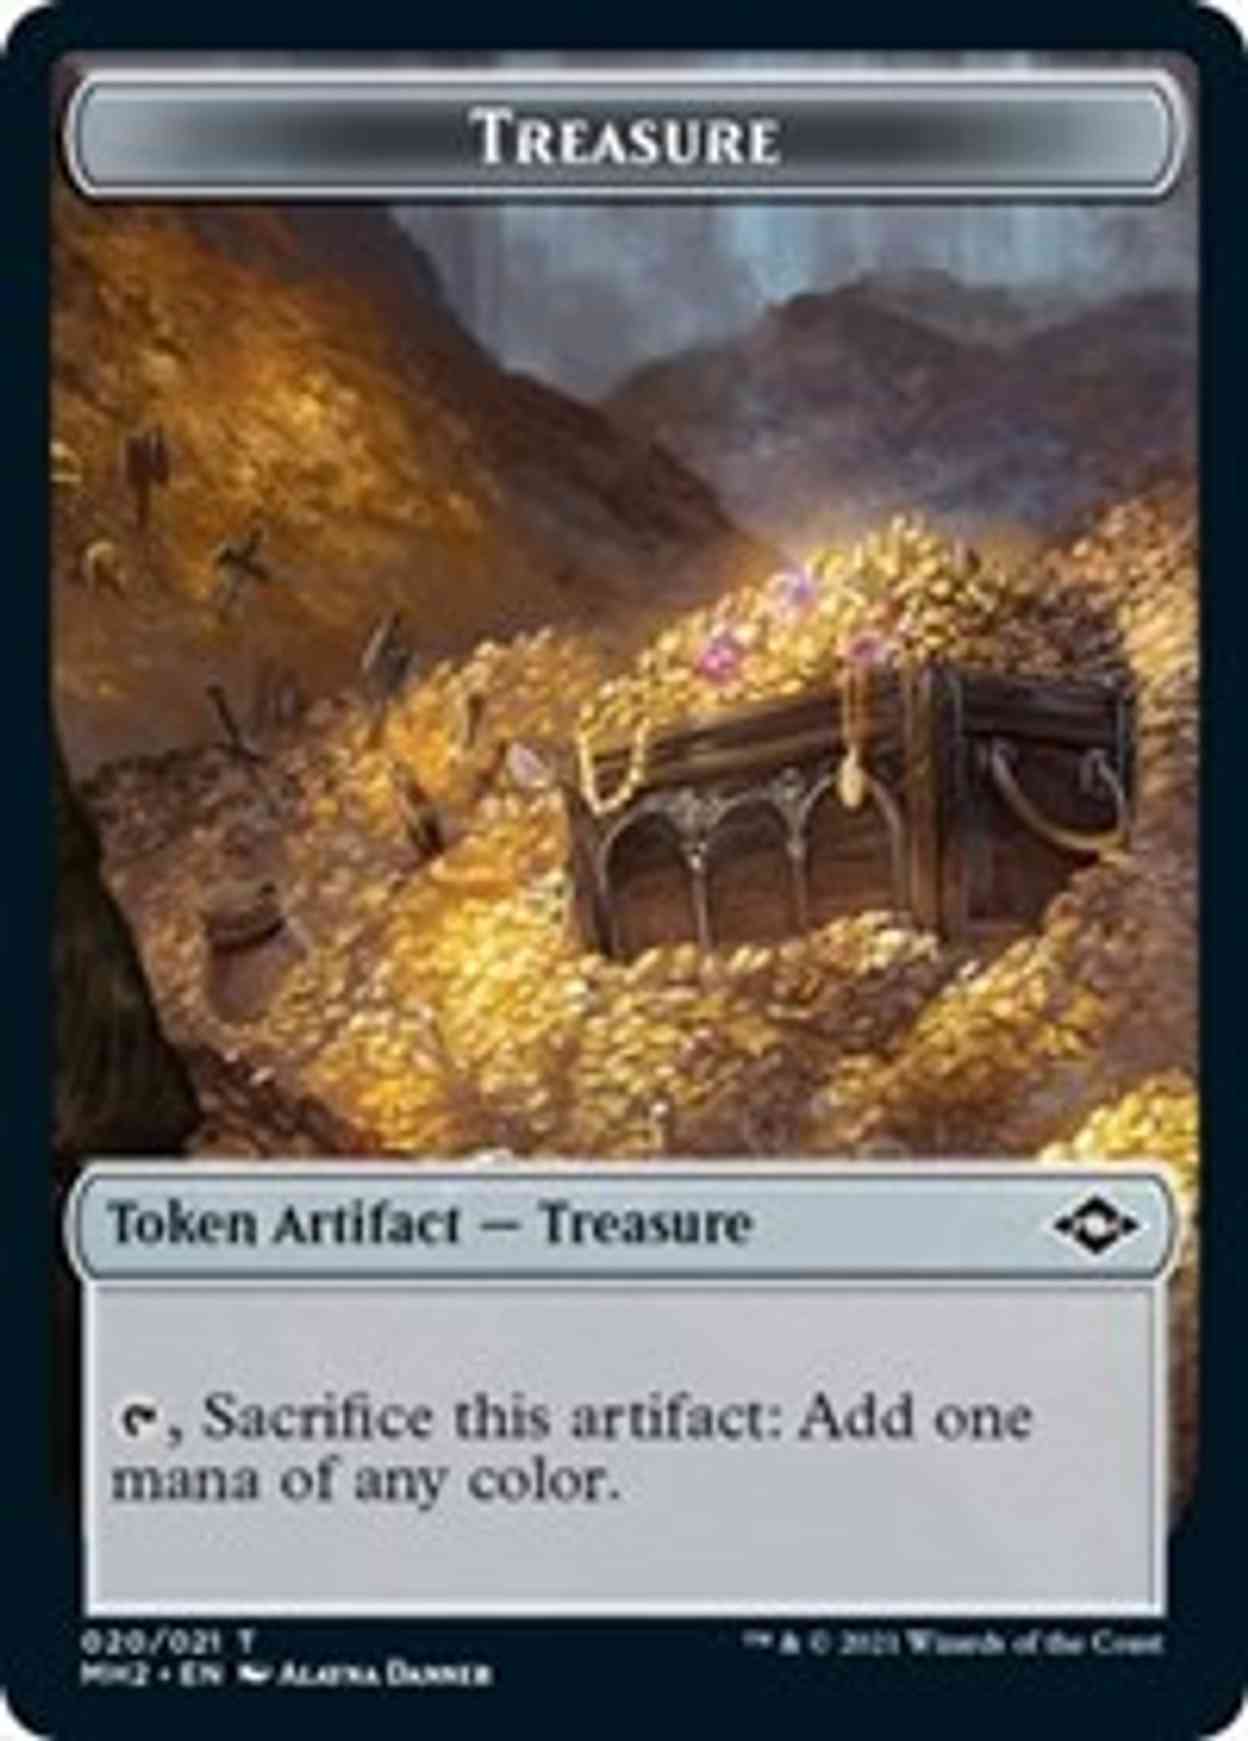 Treasure (020) Token magic card front